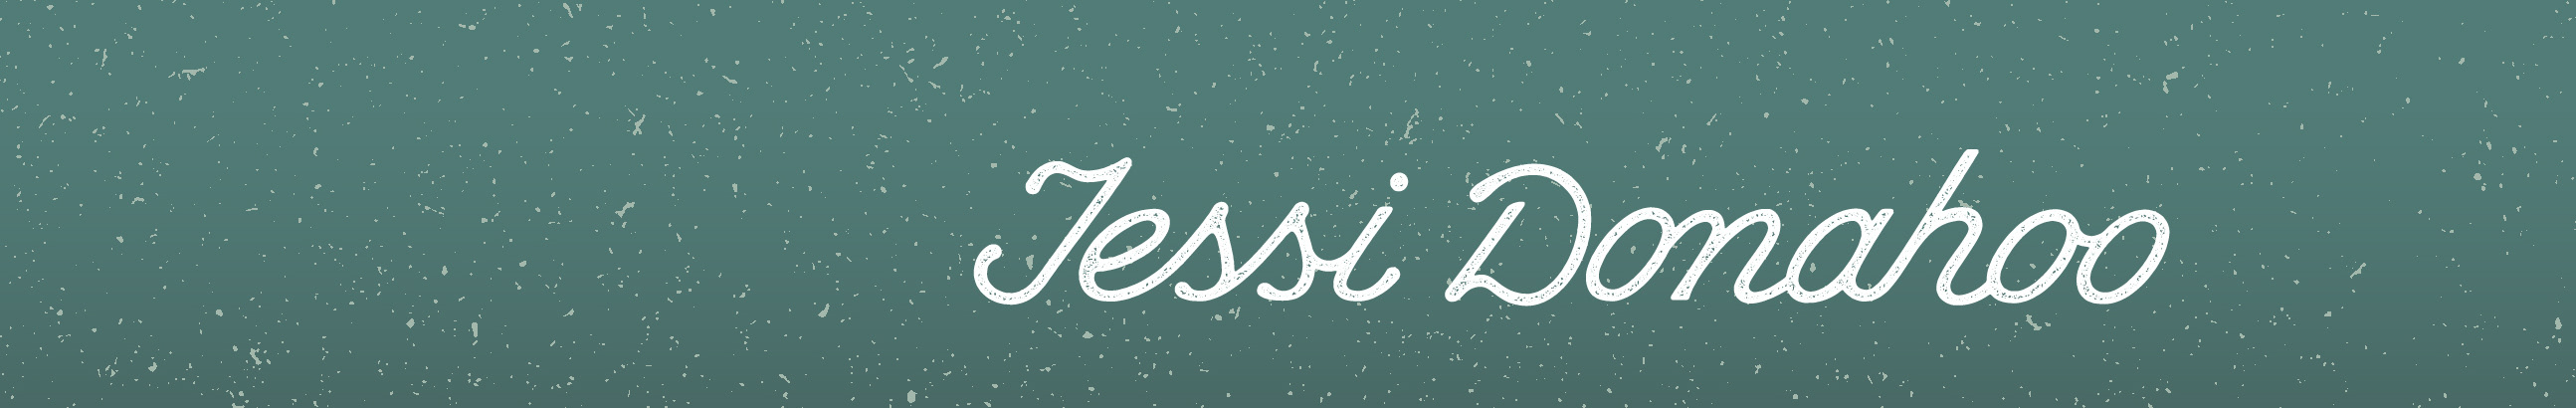 Jessi Donahoo's profile banner